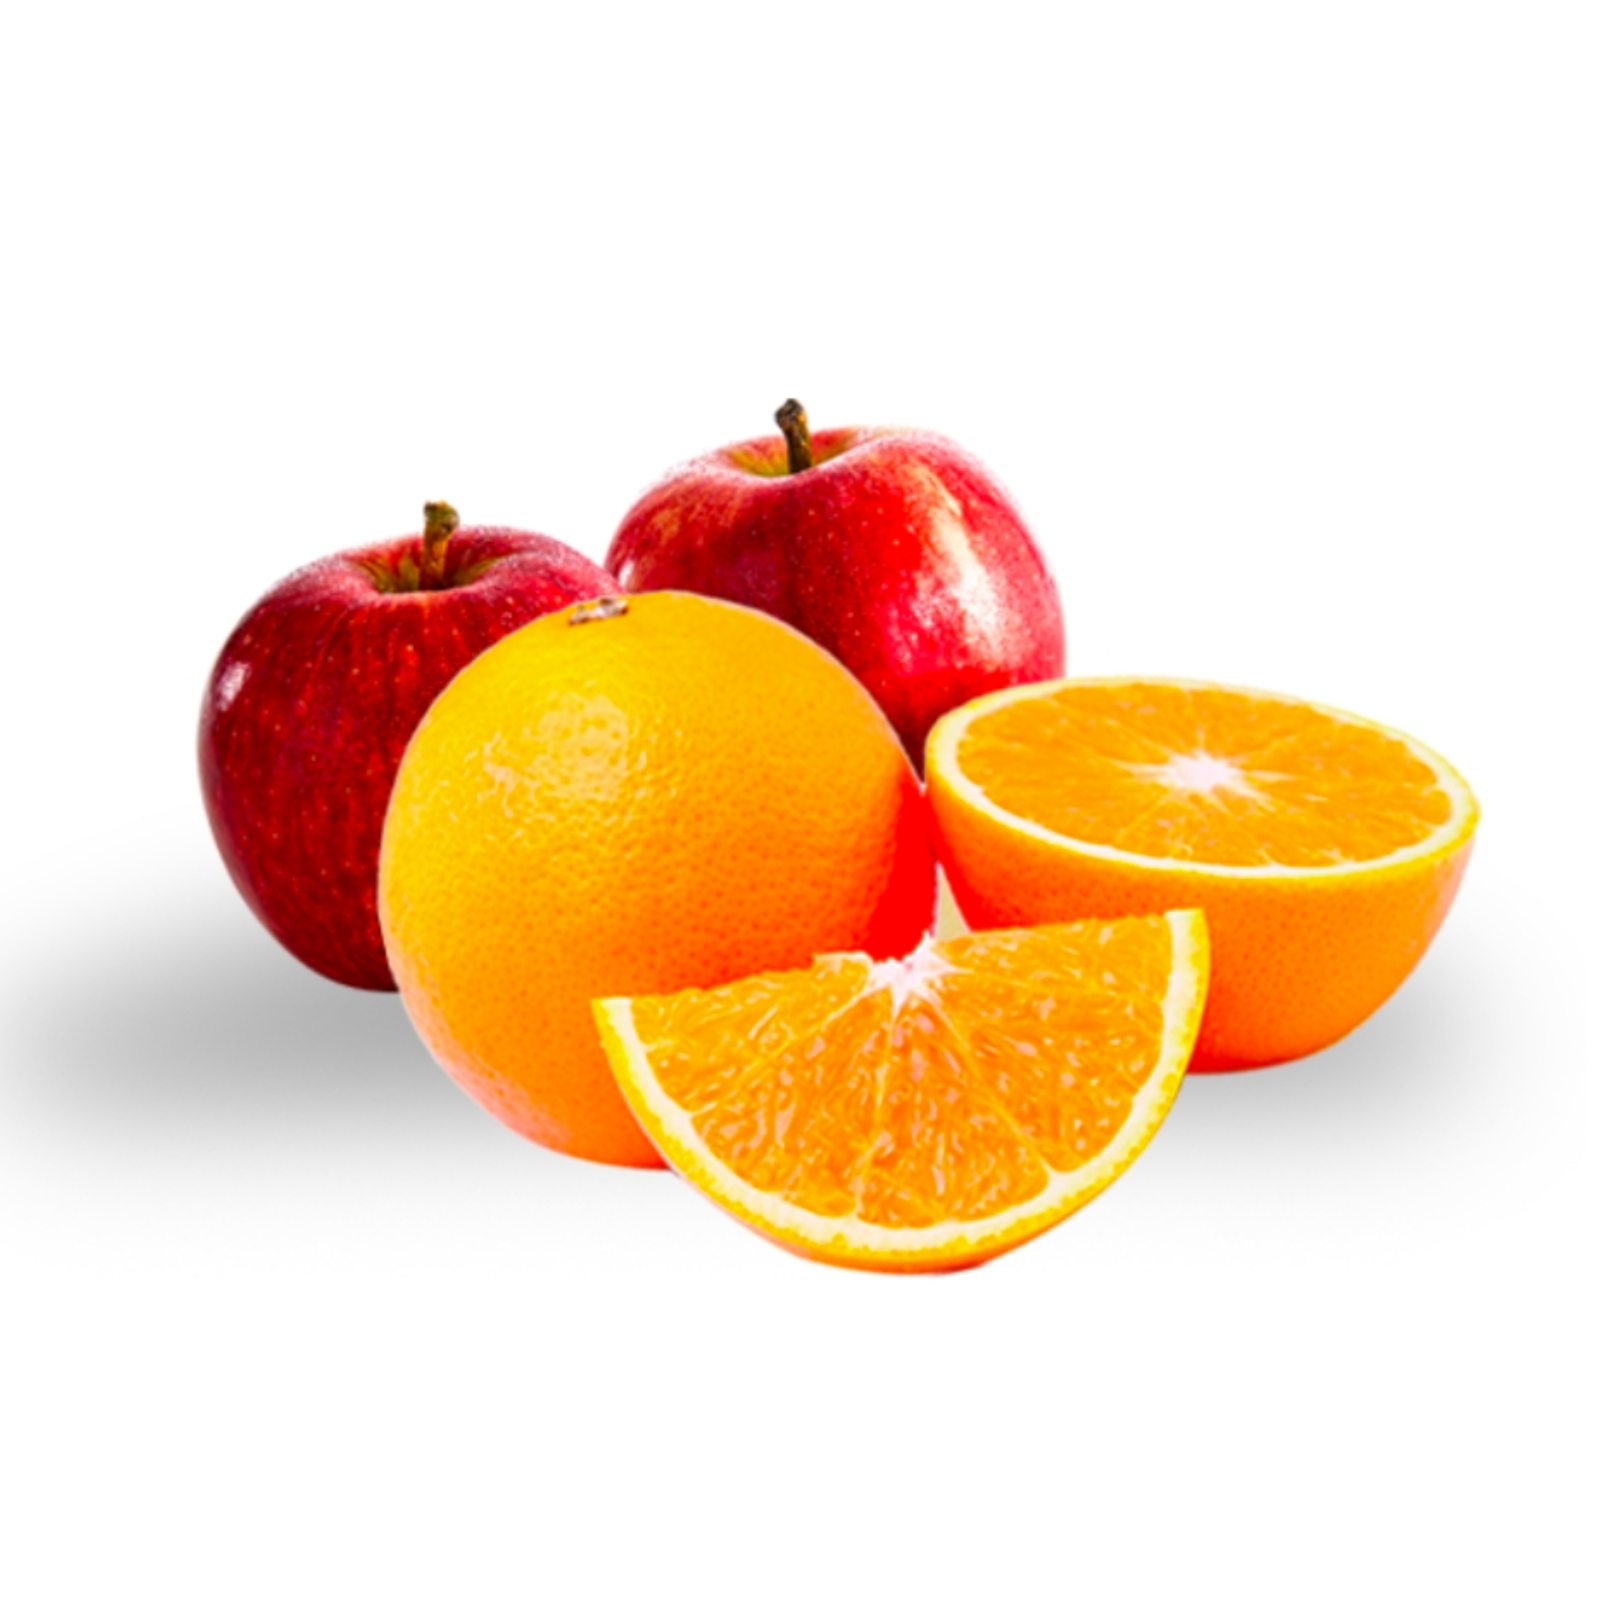 Buy Orange Apple Online NZ - Twisted Citrus